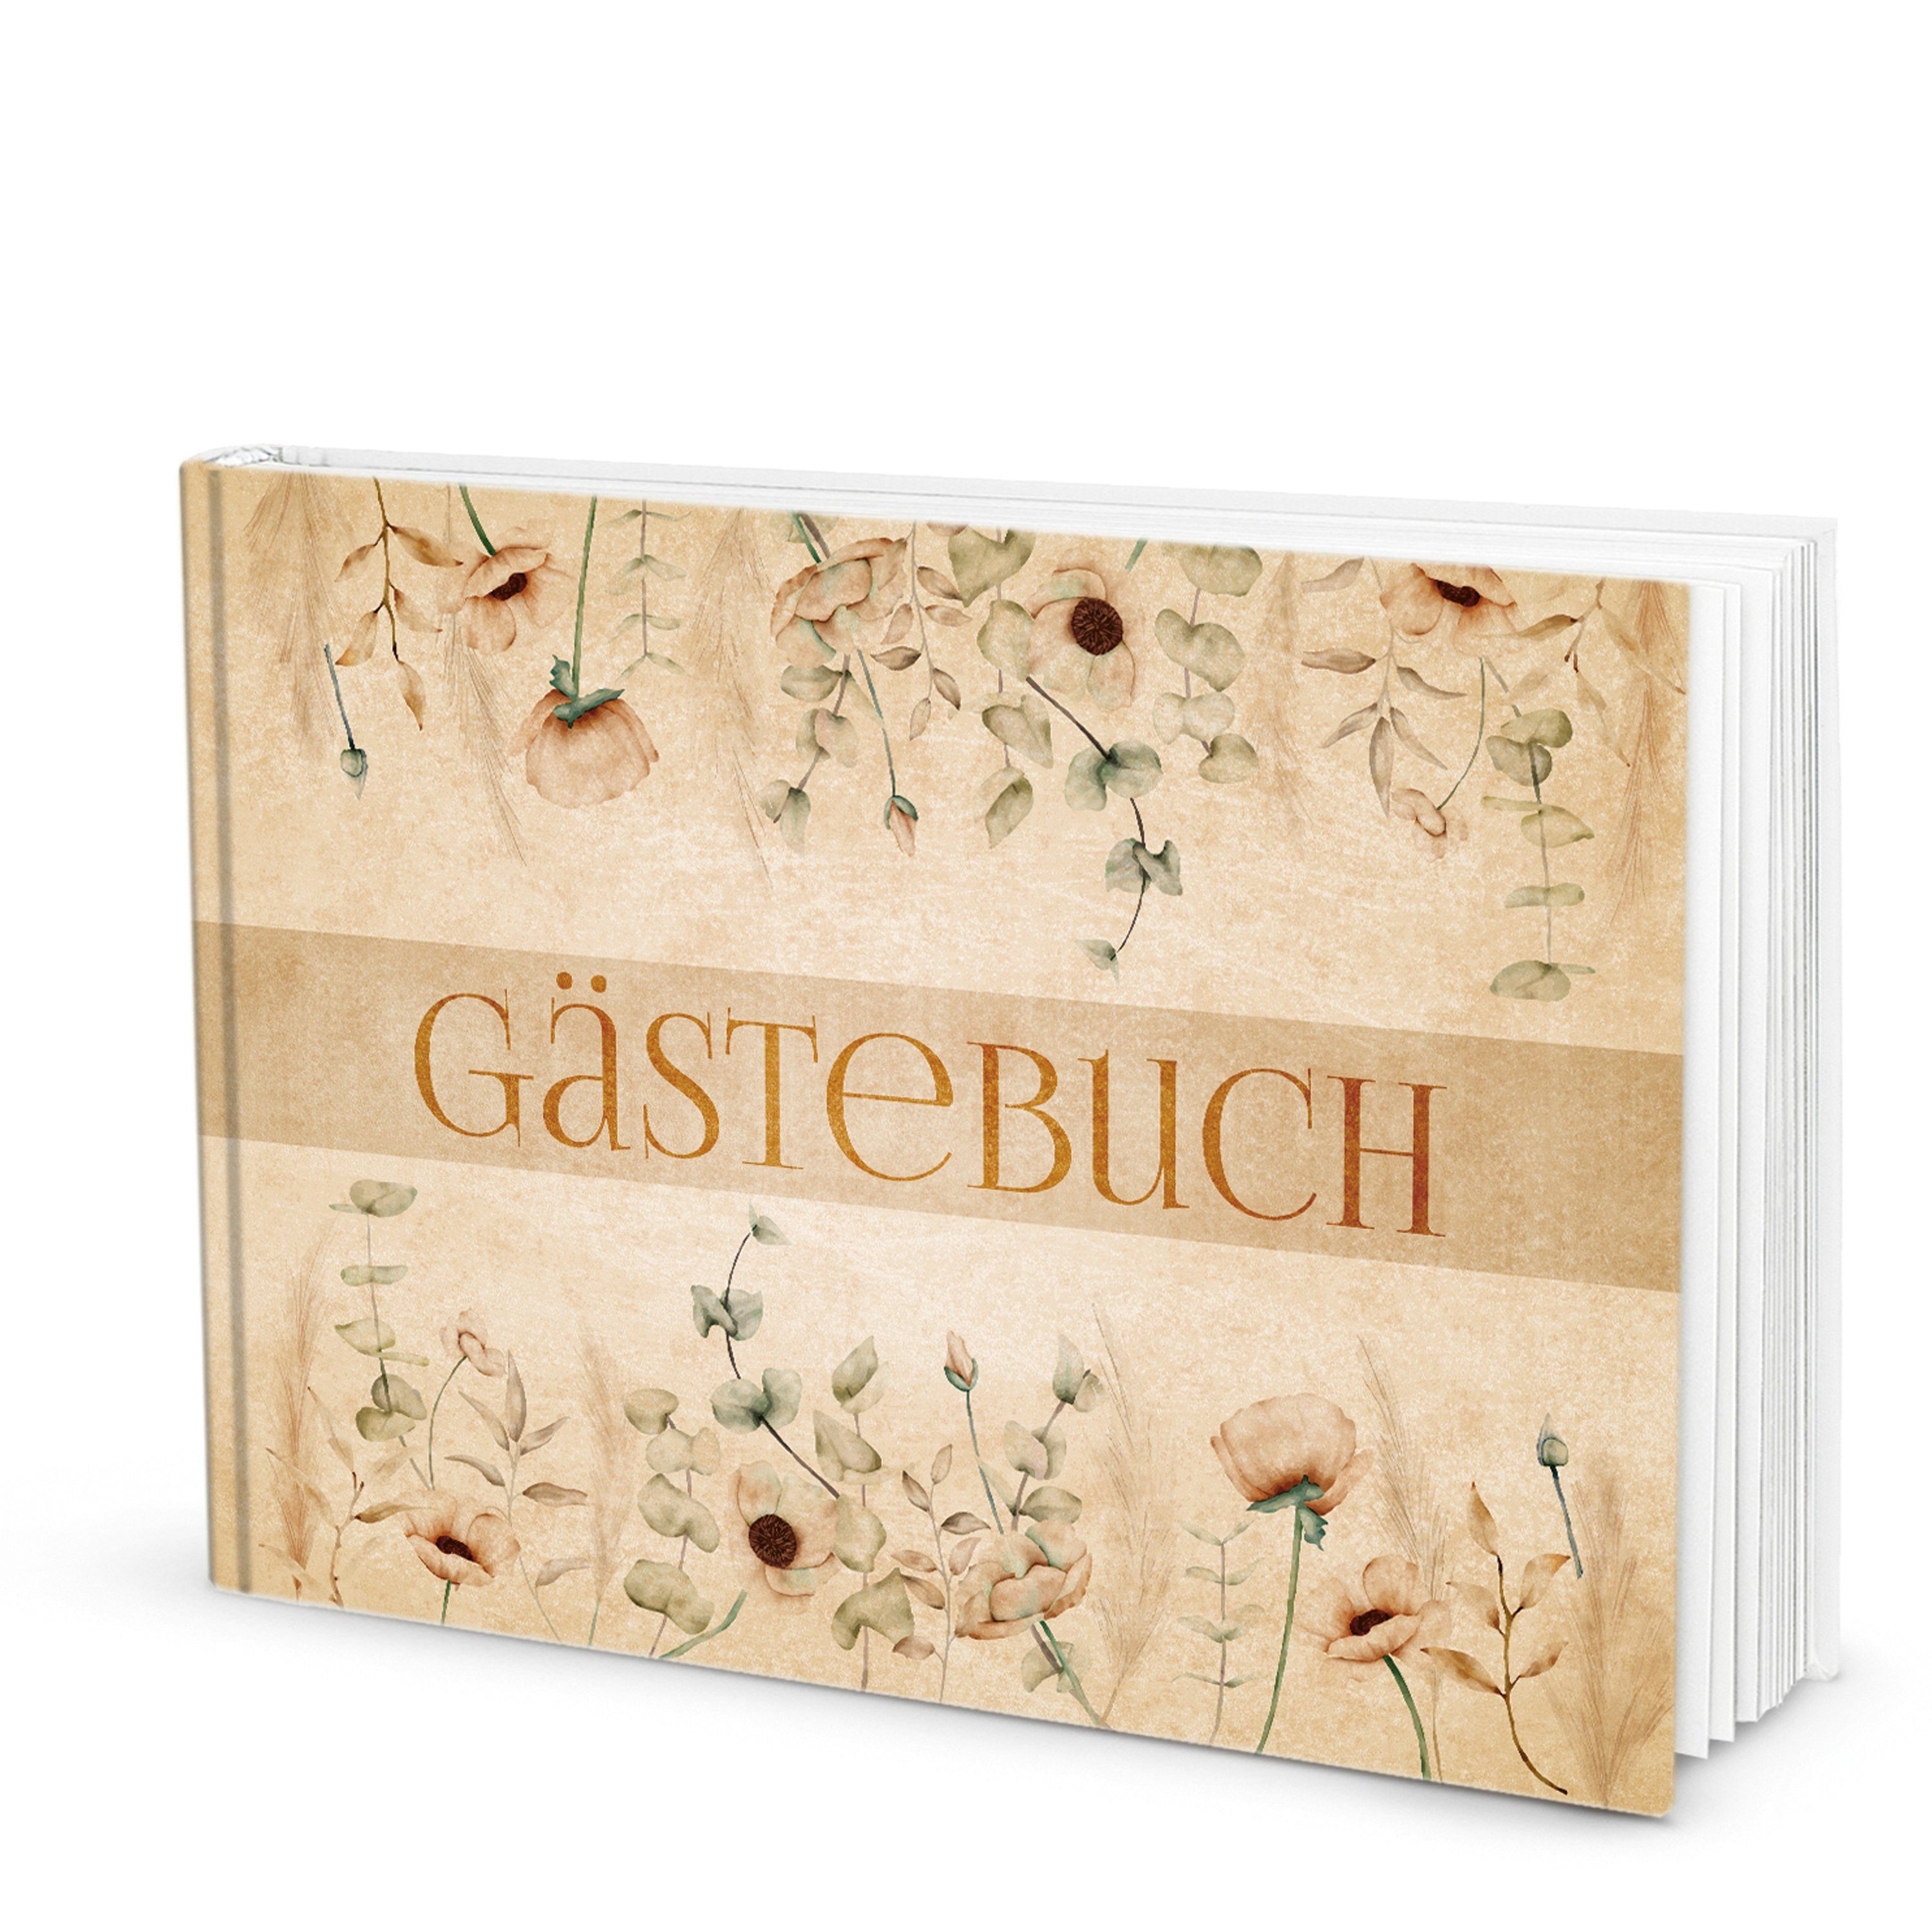 Logbuch-Verlag Tagebuch Gästebuch boho vintage DIN A4 quer beige floral